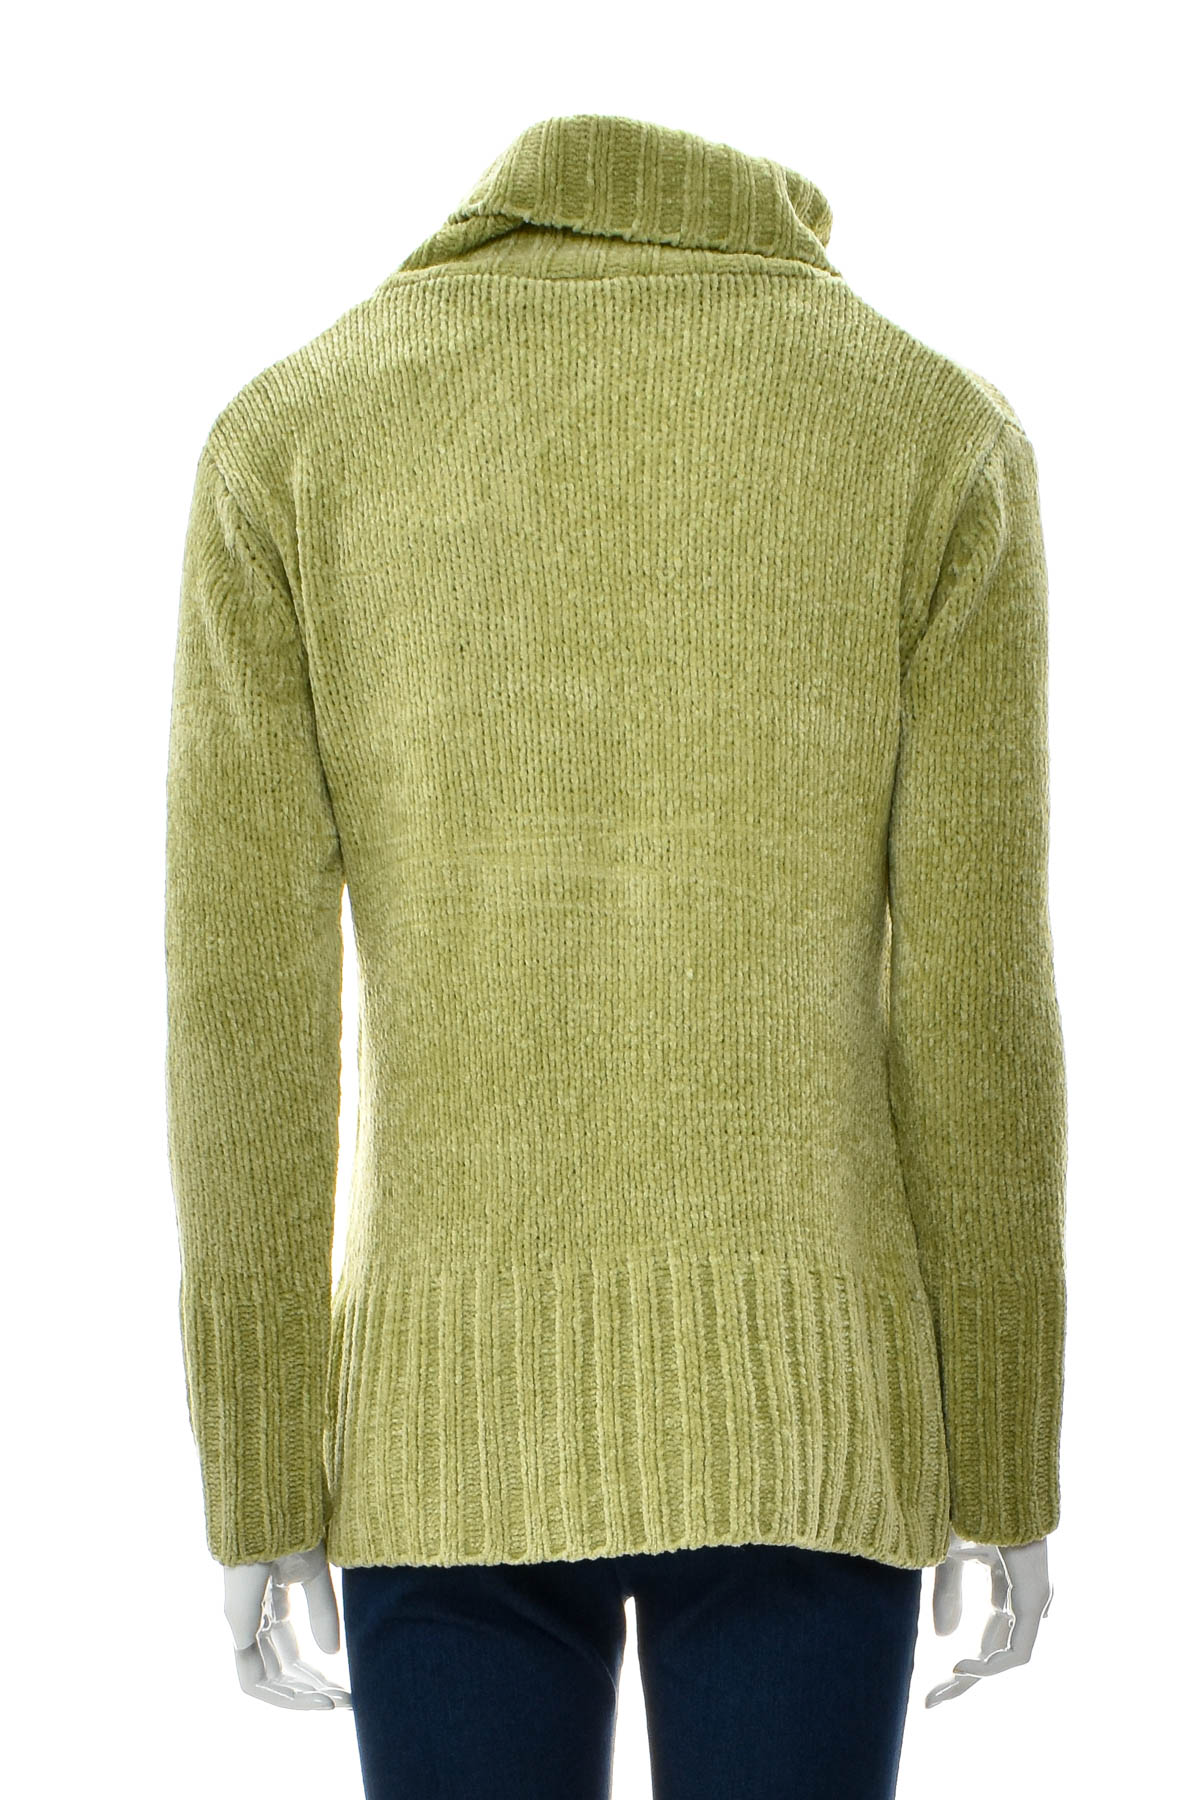 Дамски пуловер - Yoors - 1